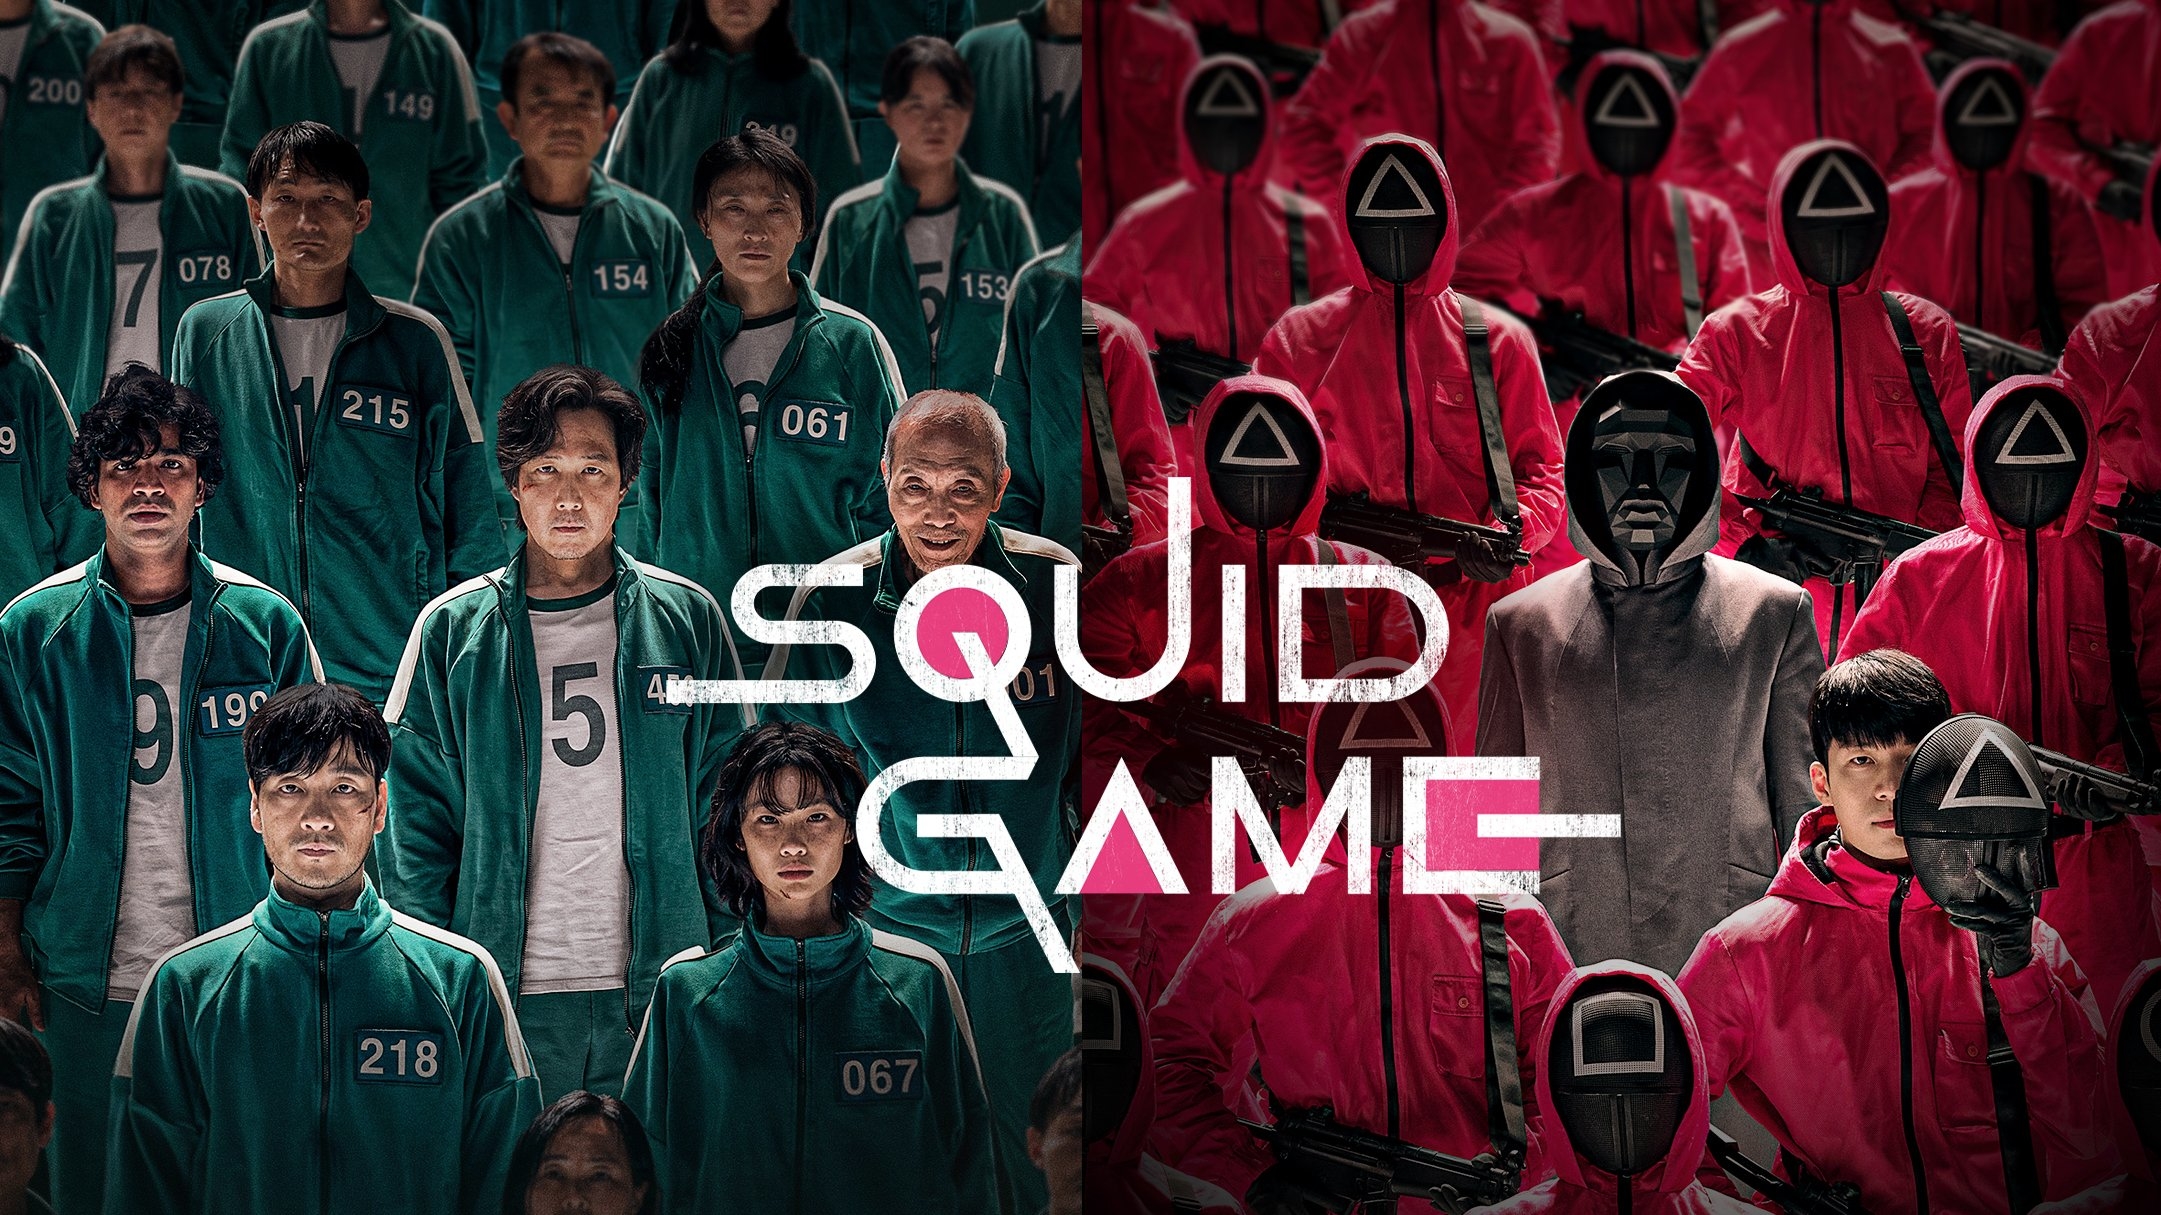 Official Squid Game BWVlZmWUmZqaraWkpJRnZmtmrWZnZmo 